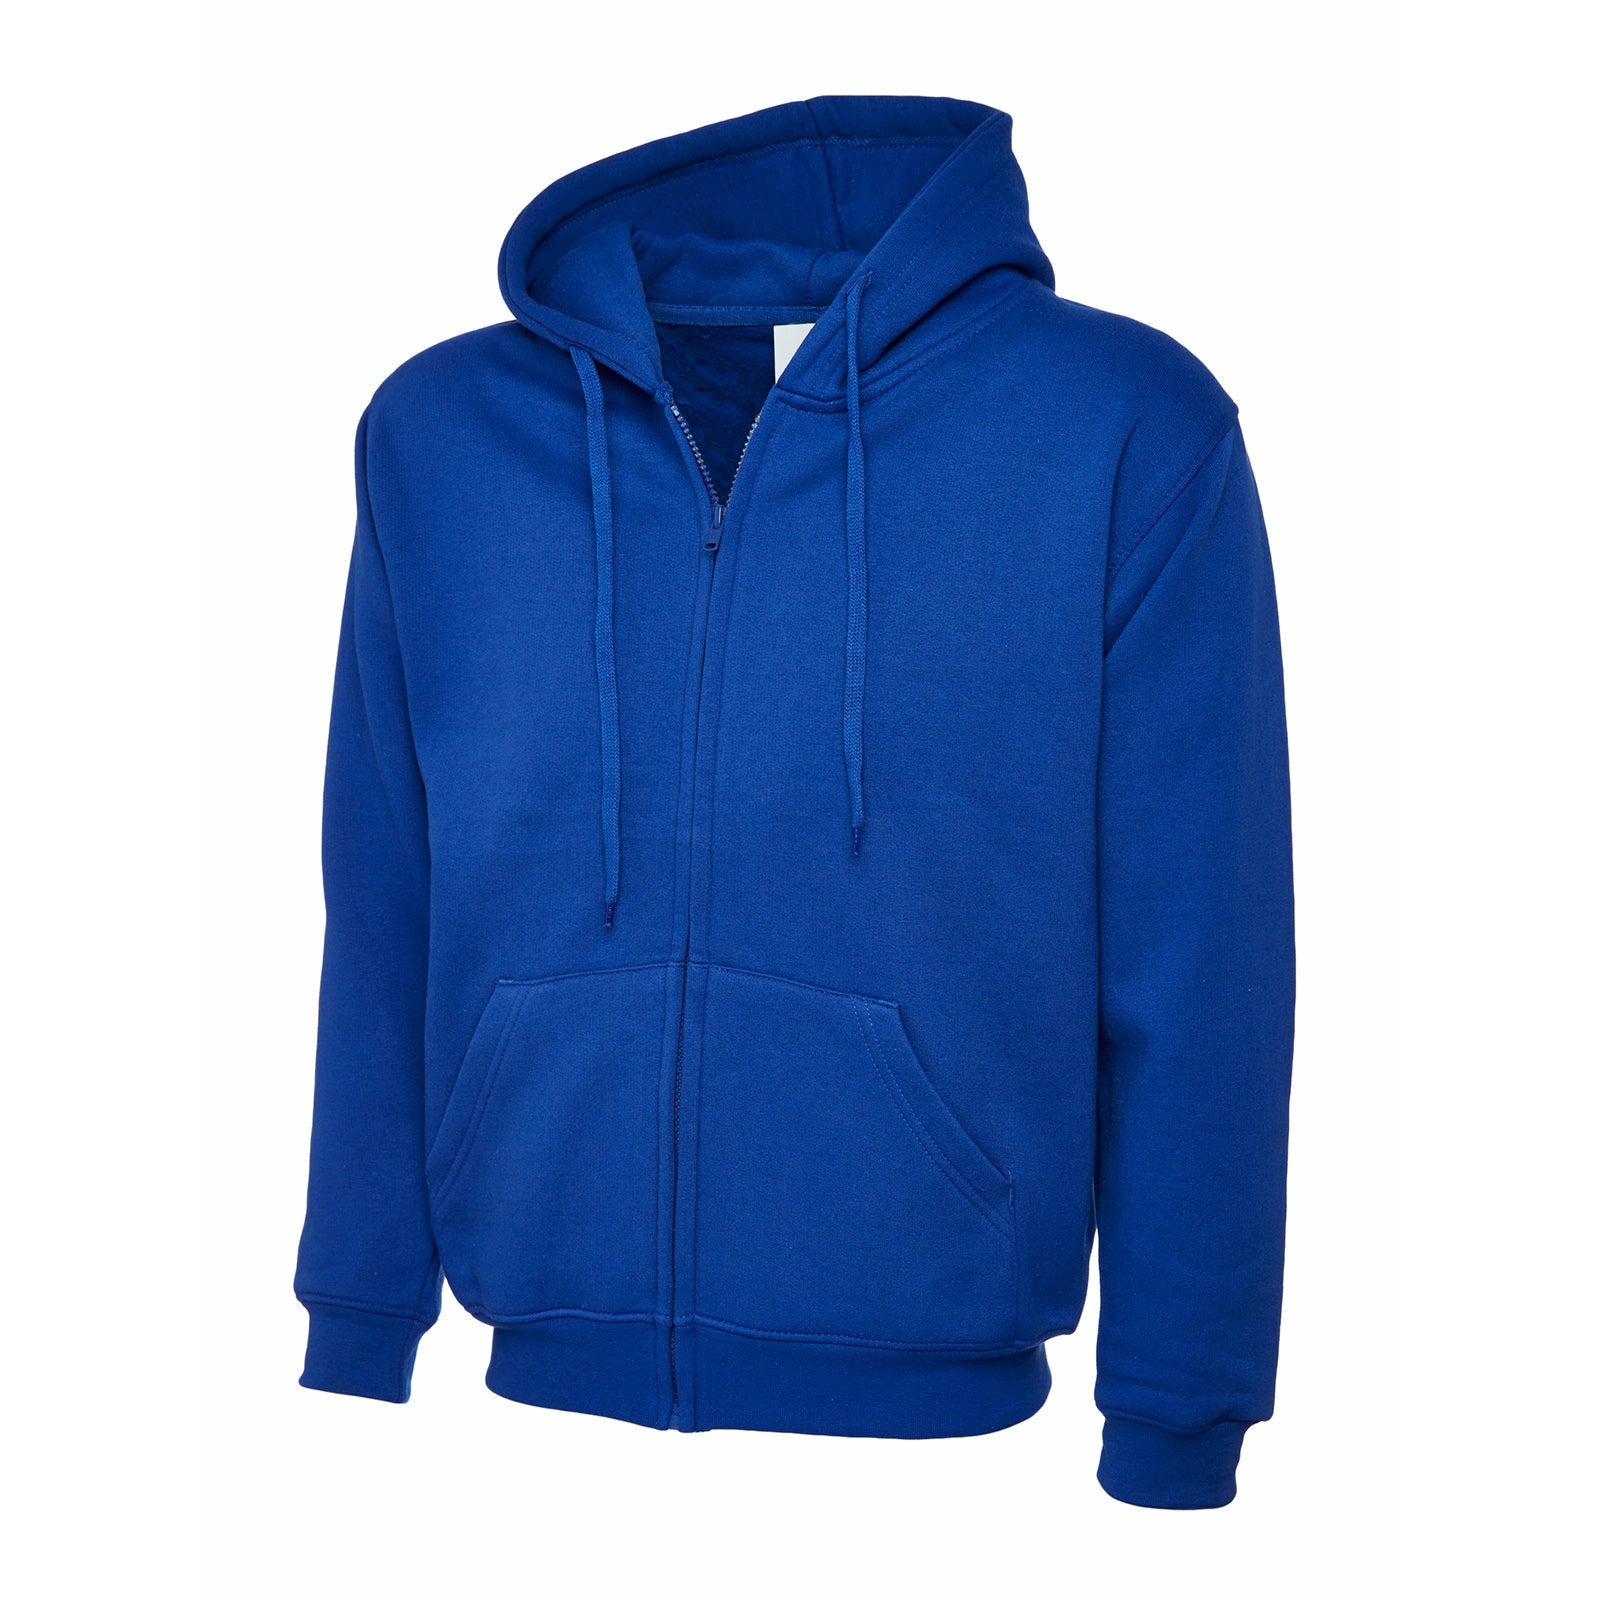 Adults Classic Full Zip Hooded Sweatshirt Royal blue